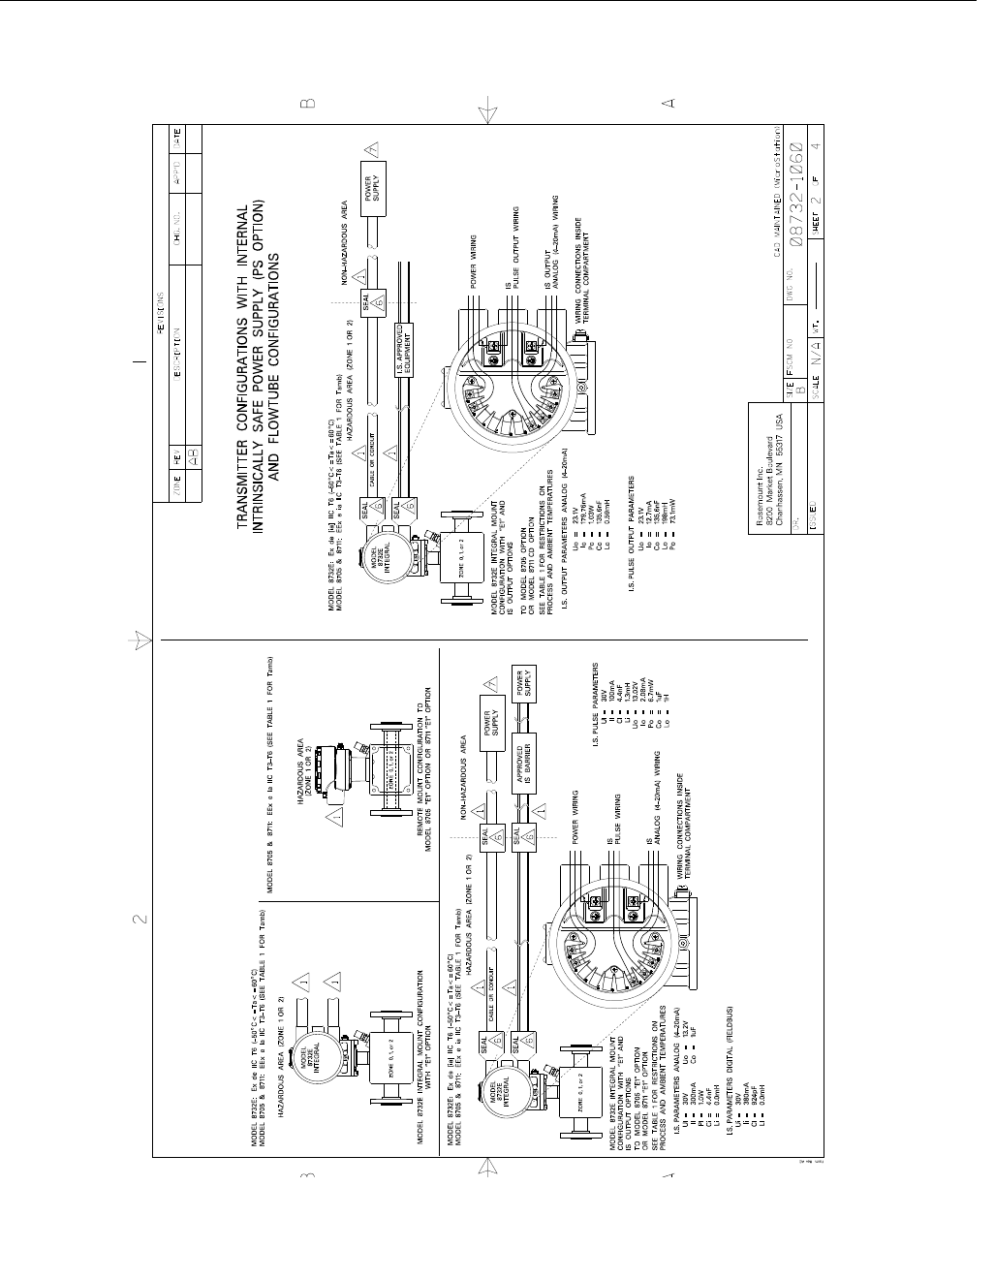 Rosemount 8732e Wiring Diagram Search Best 4K Wallpapers